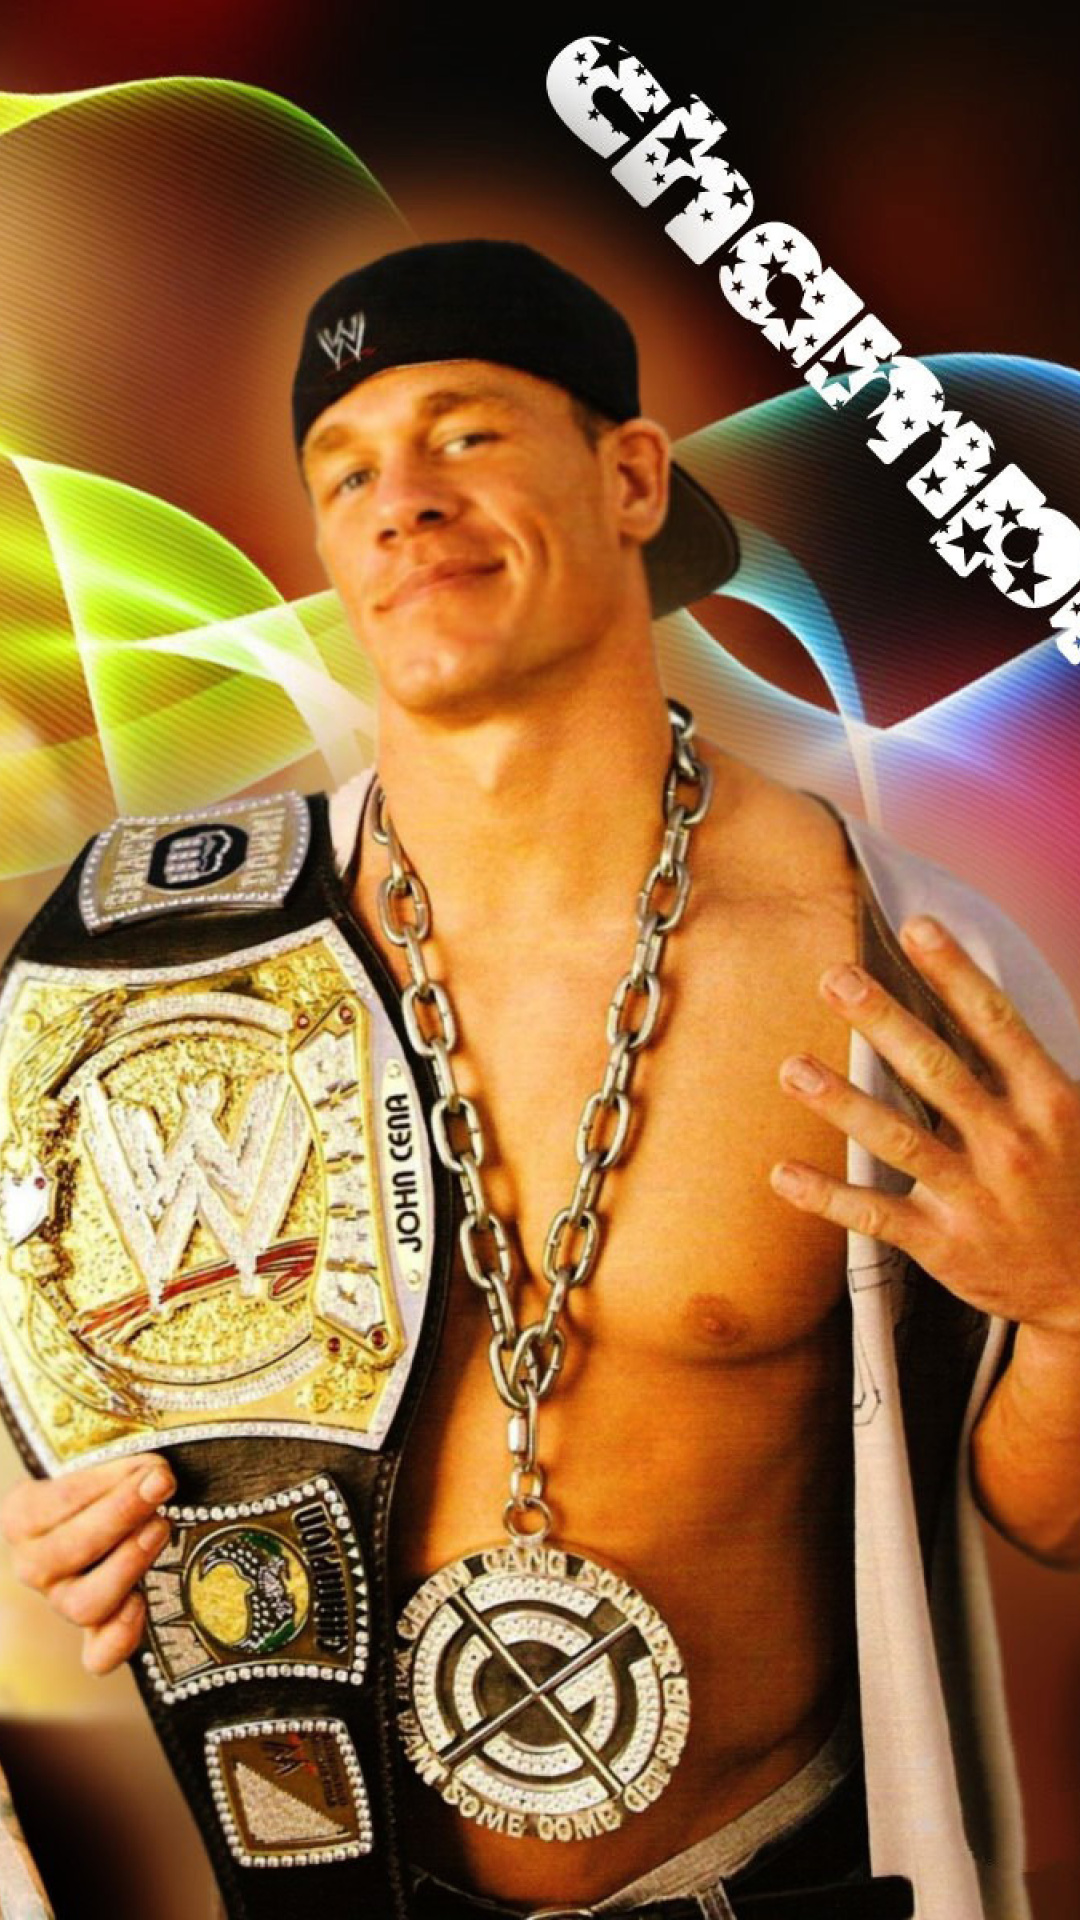 John Cena vs Randy Orton wallpaper 1080x1920